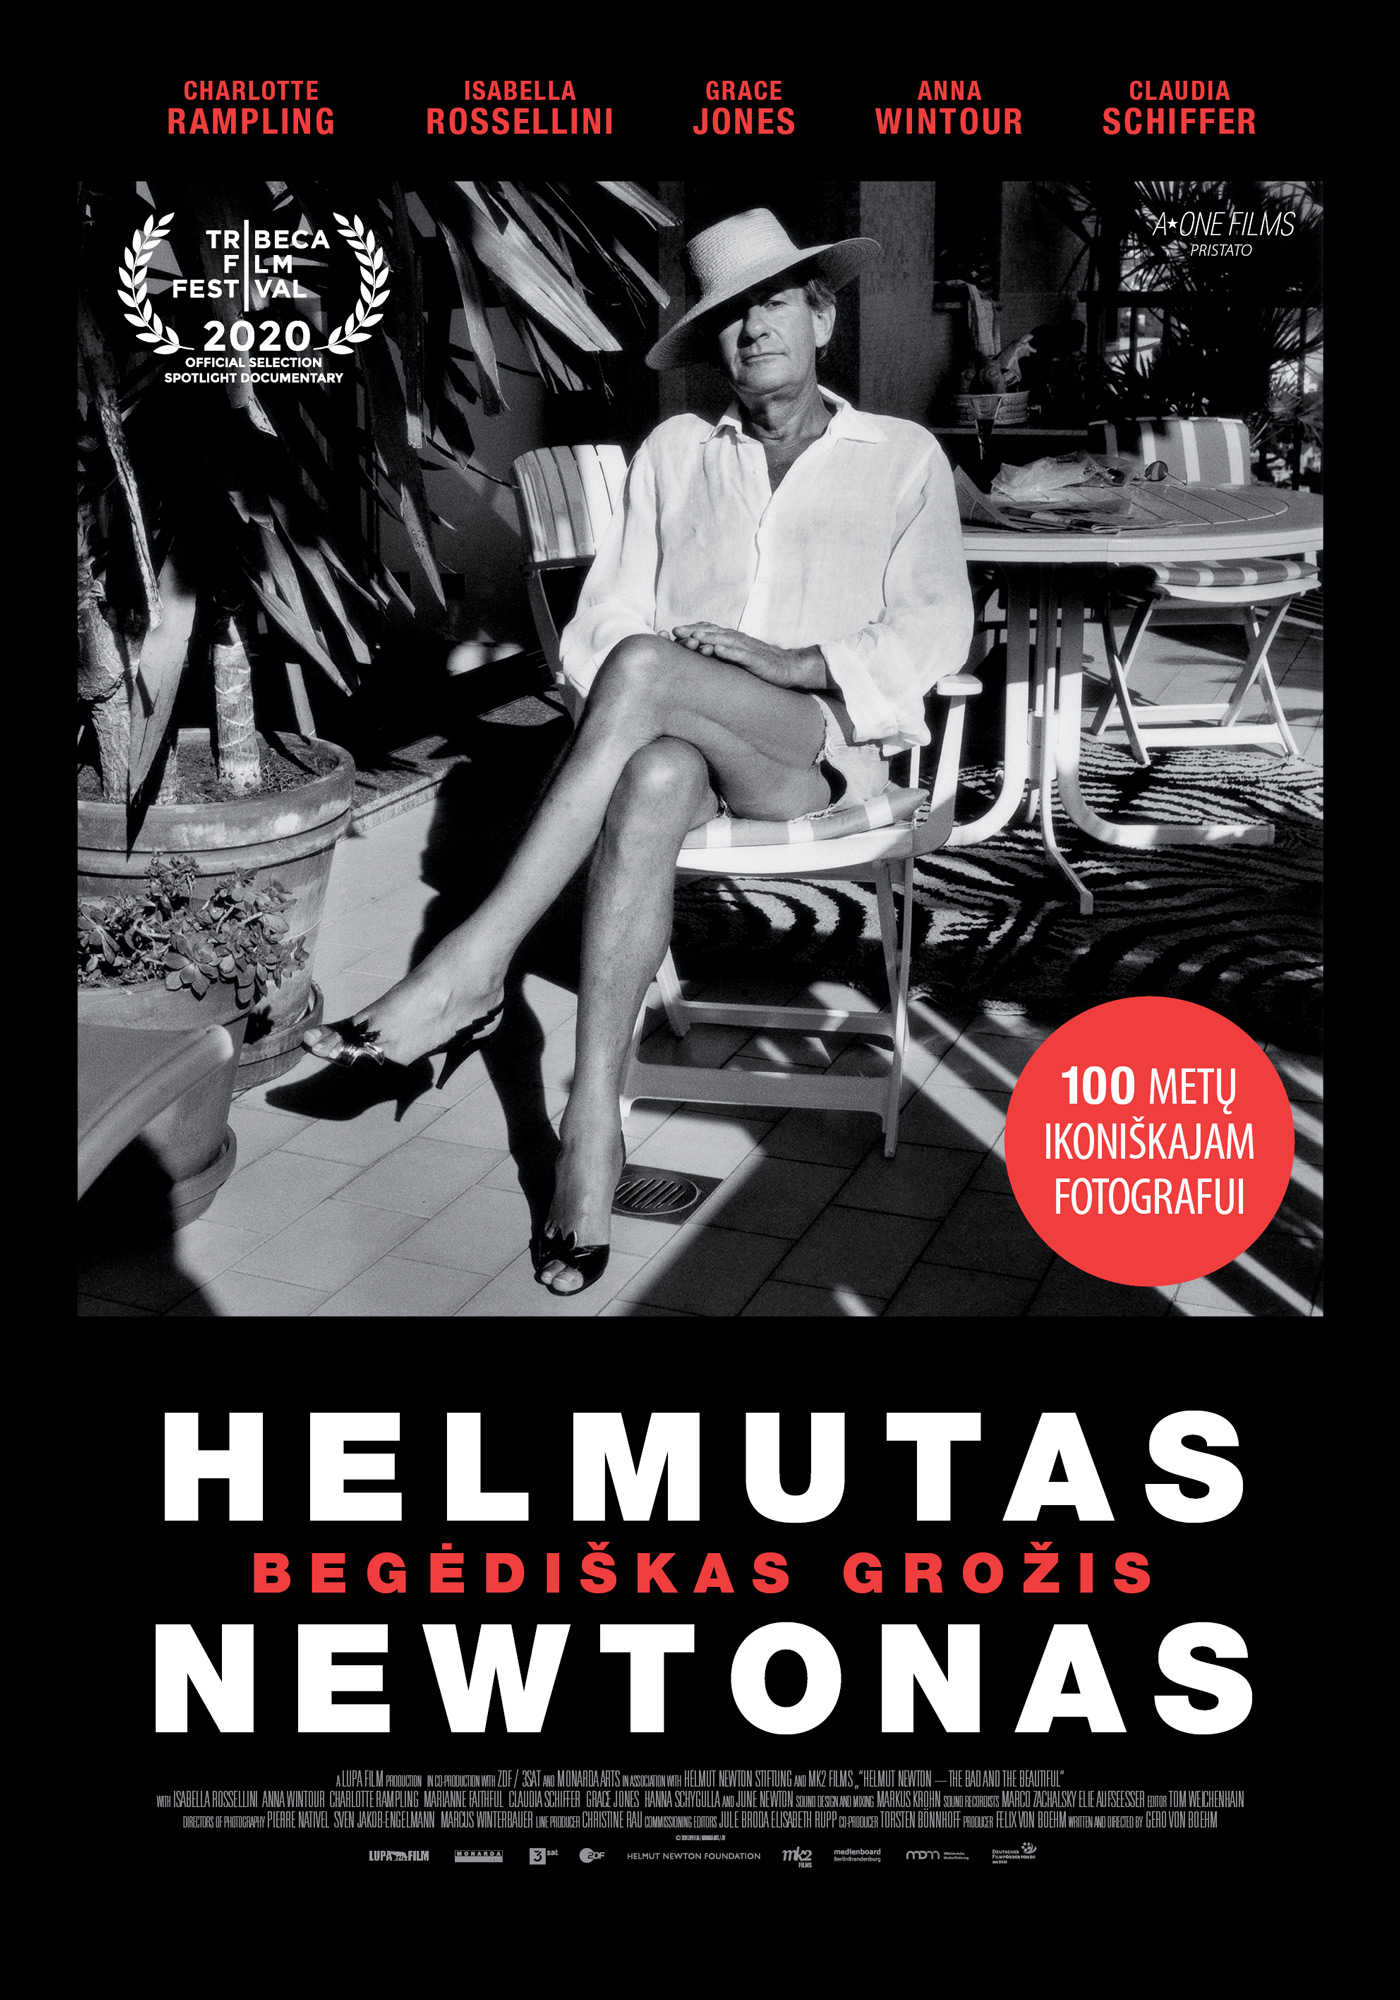 Helmut Newton: begėdiškas grožis (Helmut Newton: The Bad and the Beautiful)